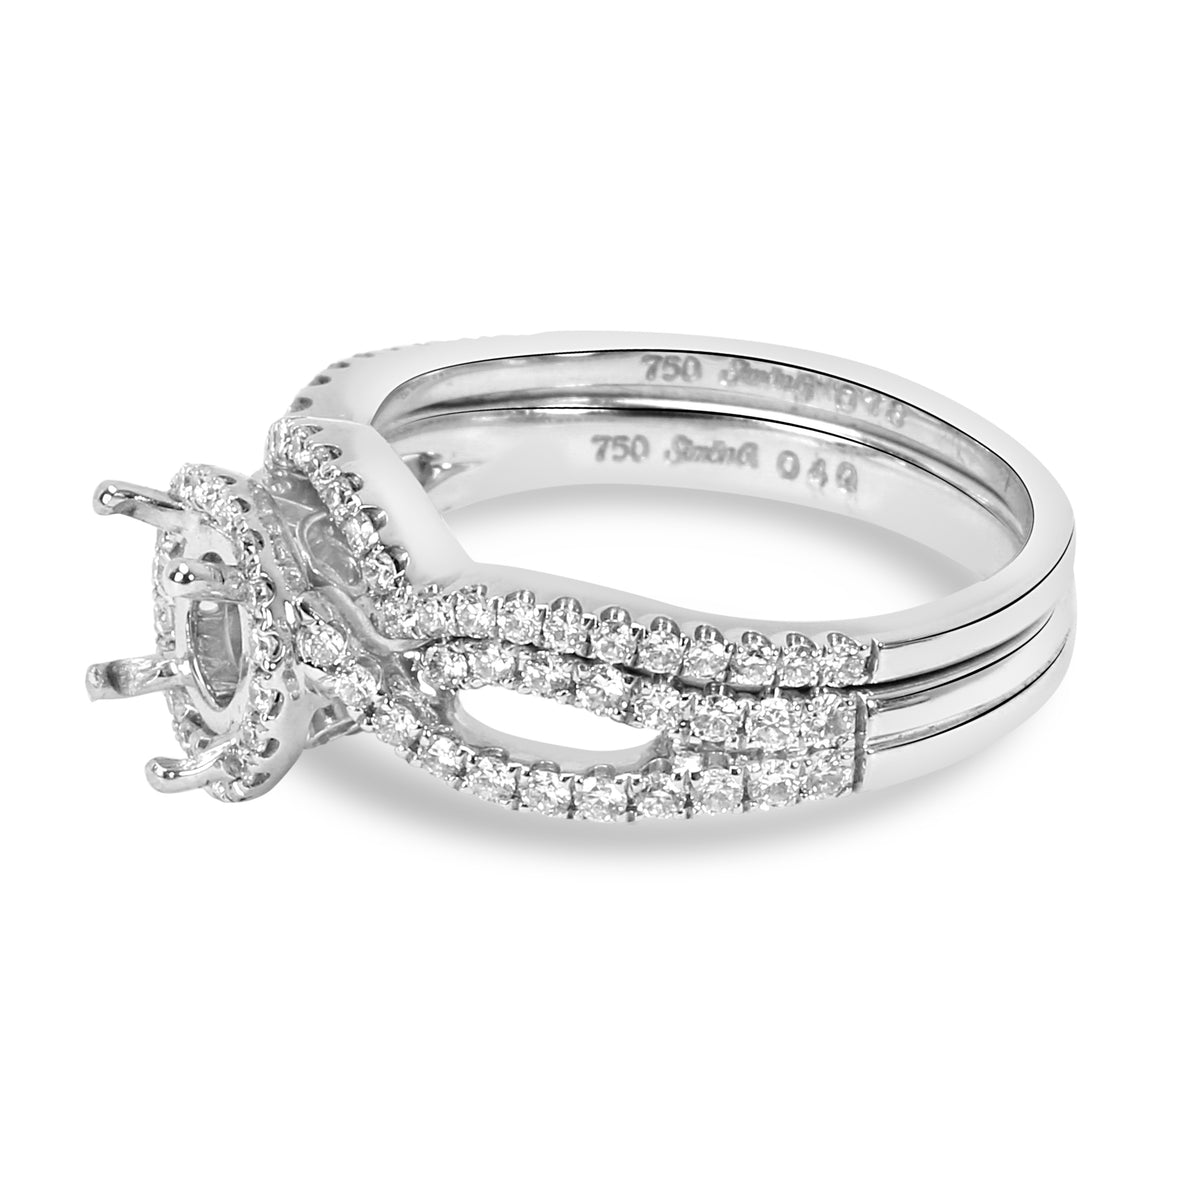 Simon G Twisted Engagement Ring Wedding Set in 18K White Gold